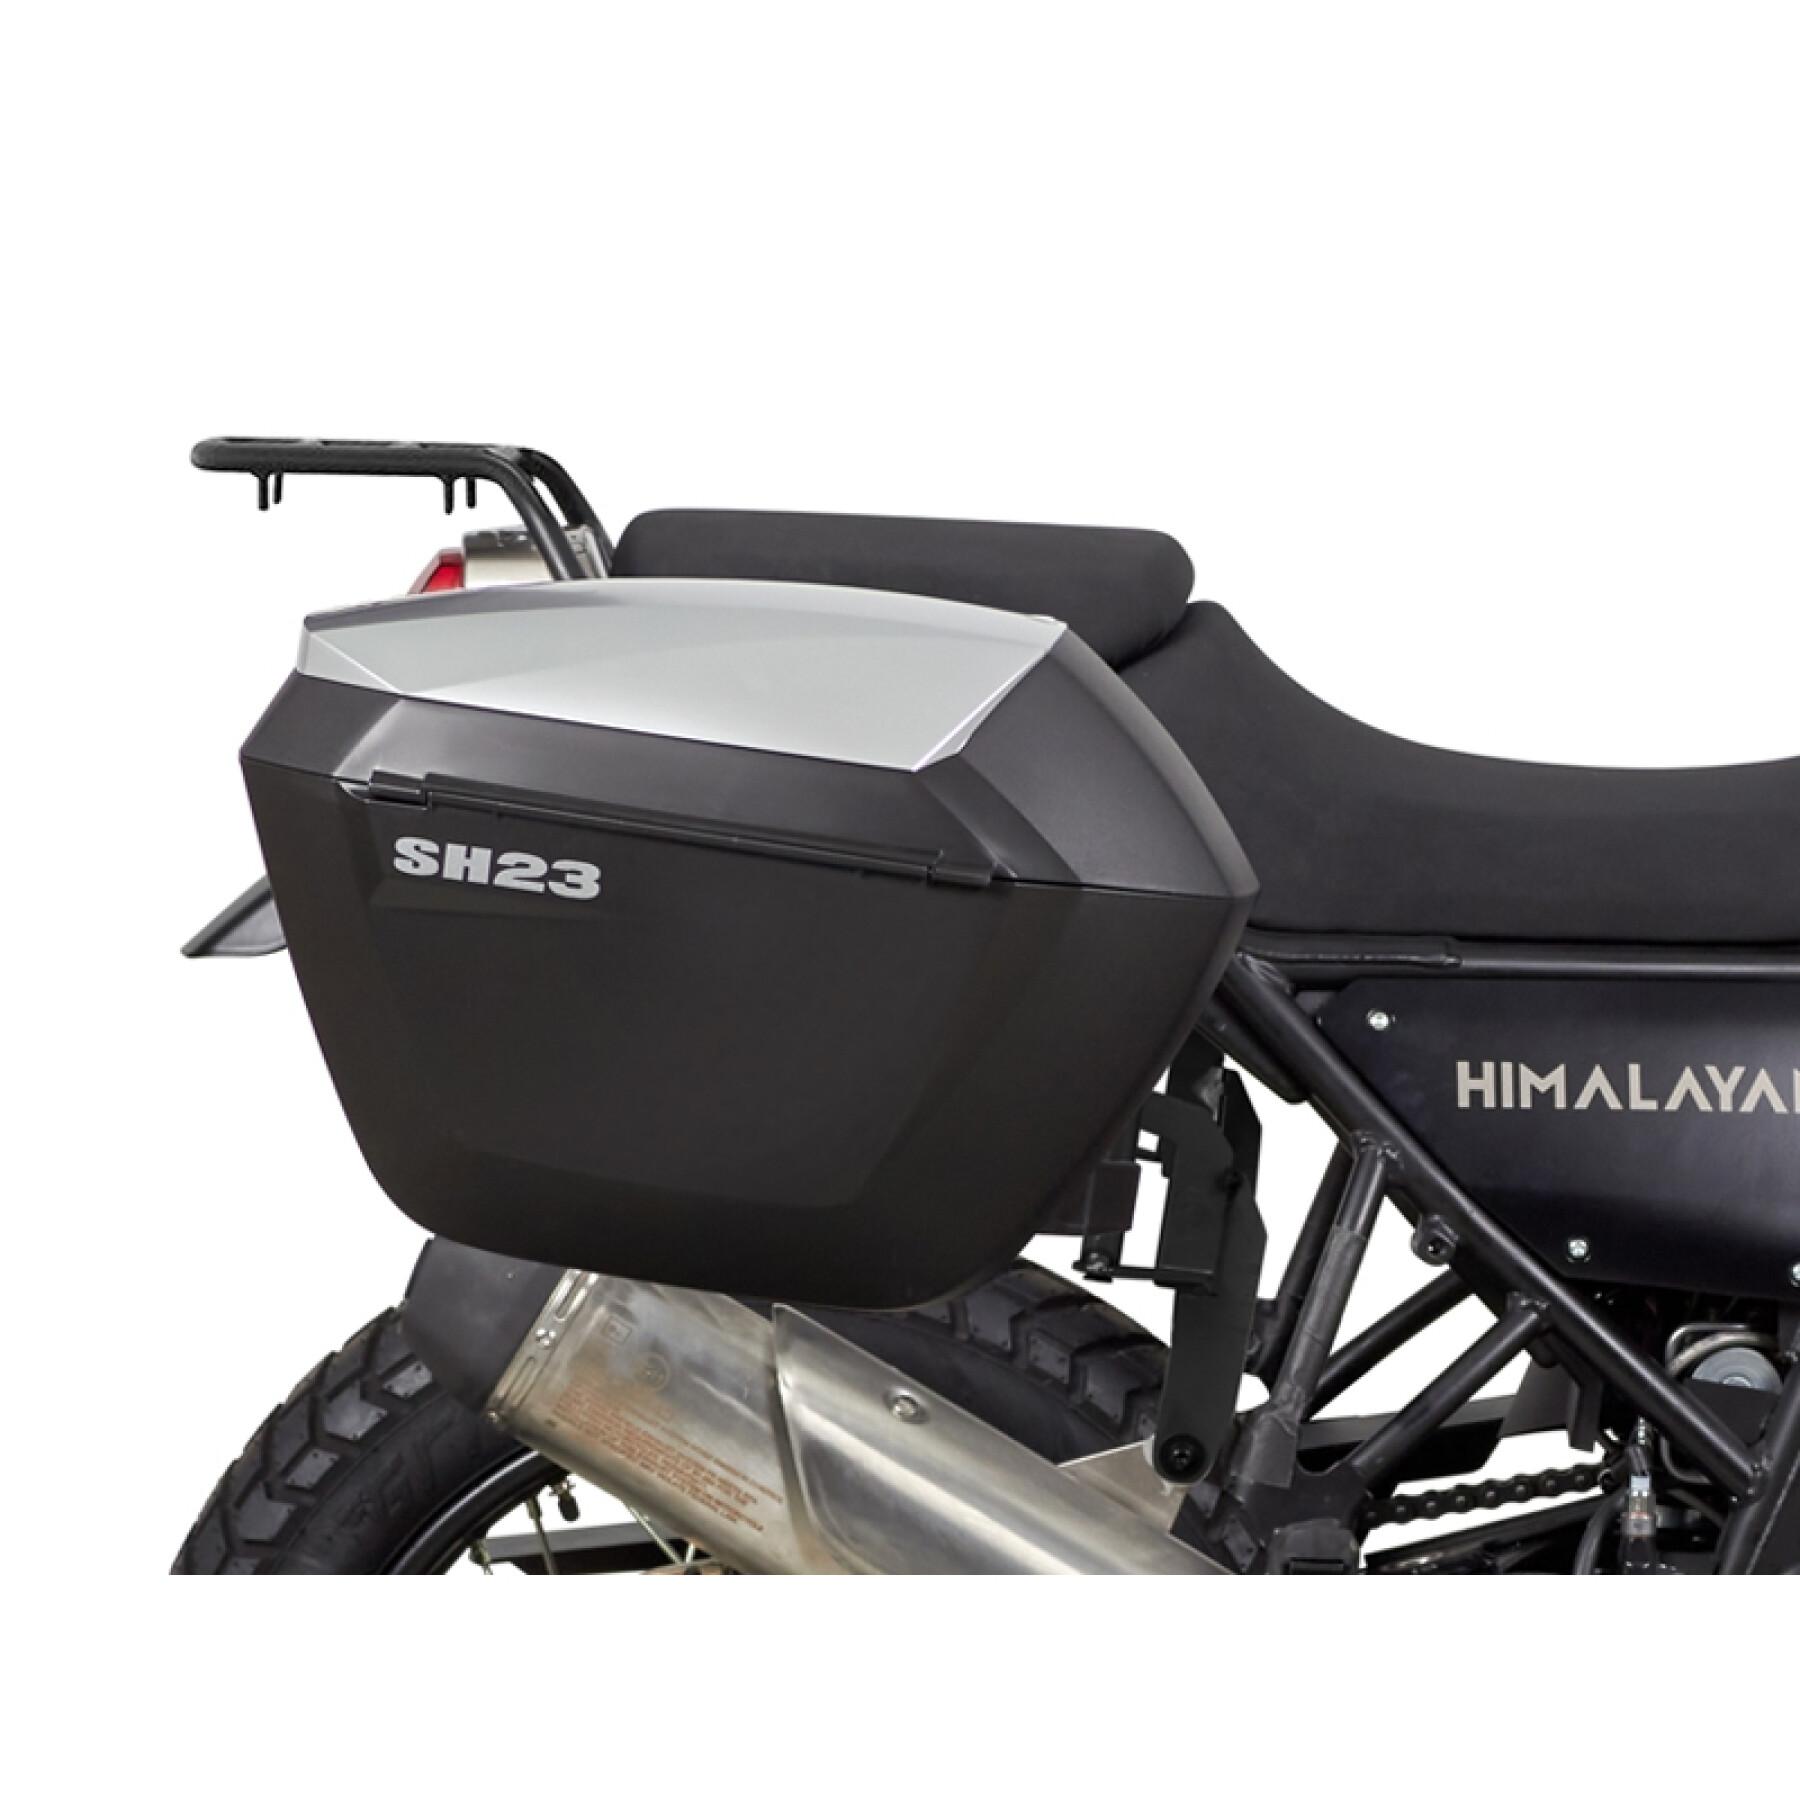 Himalayan sacoche + support - Équipement moto